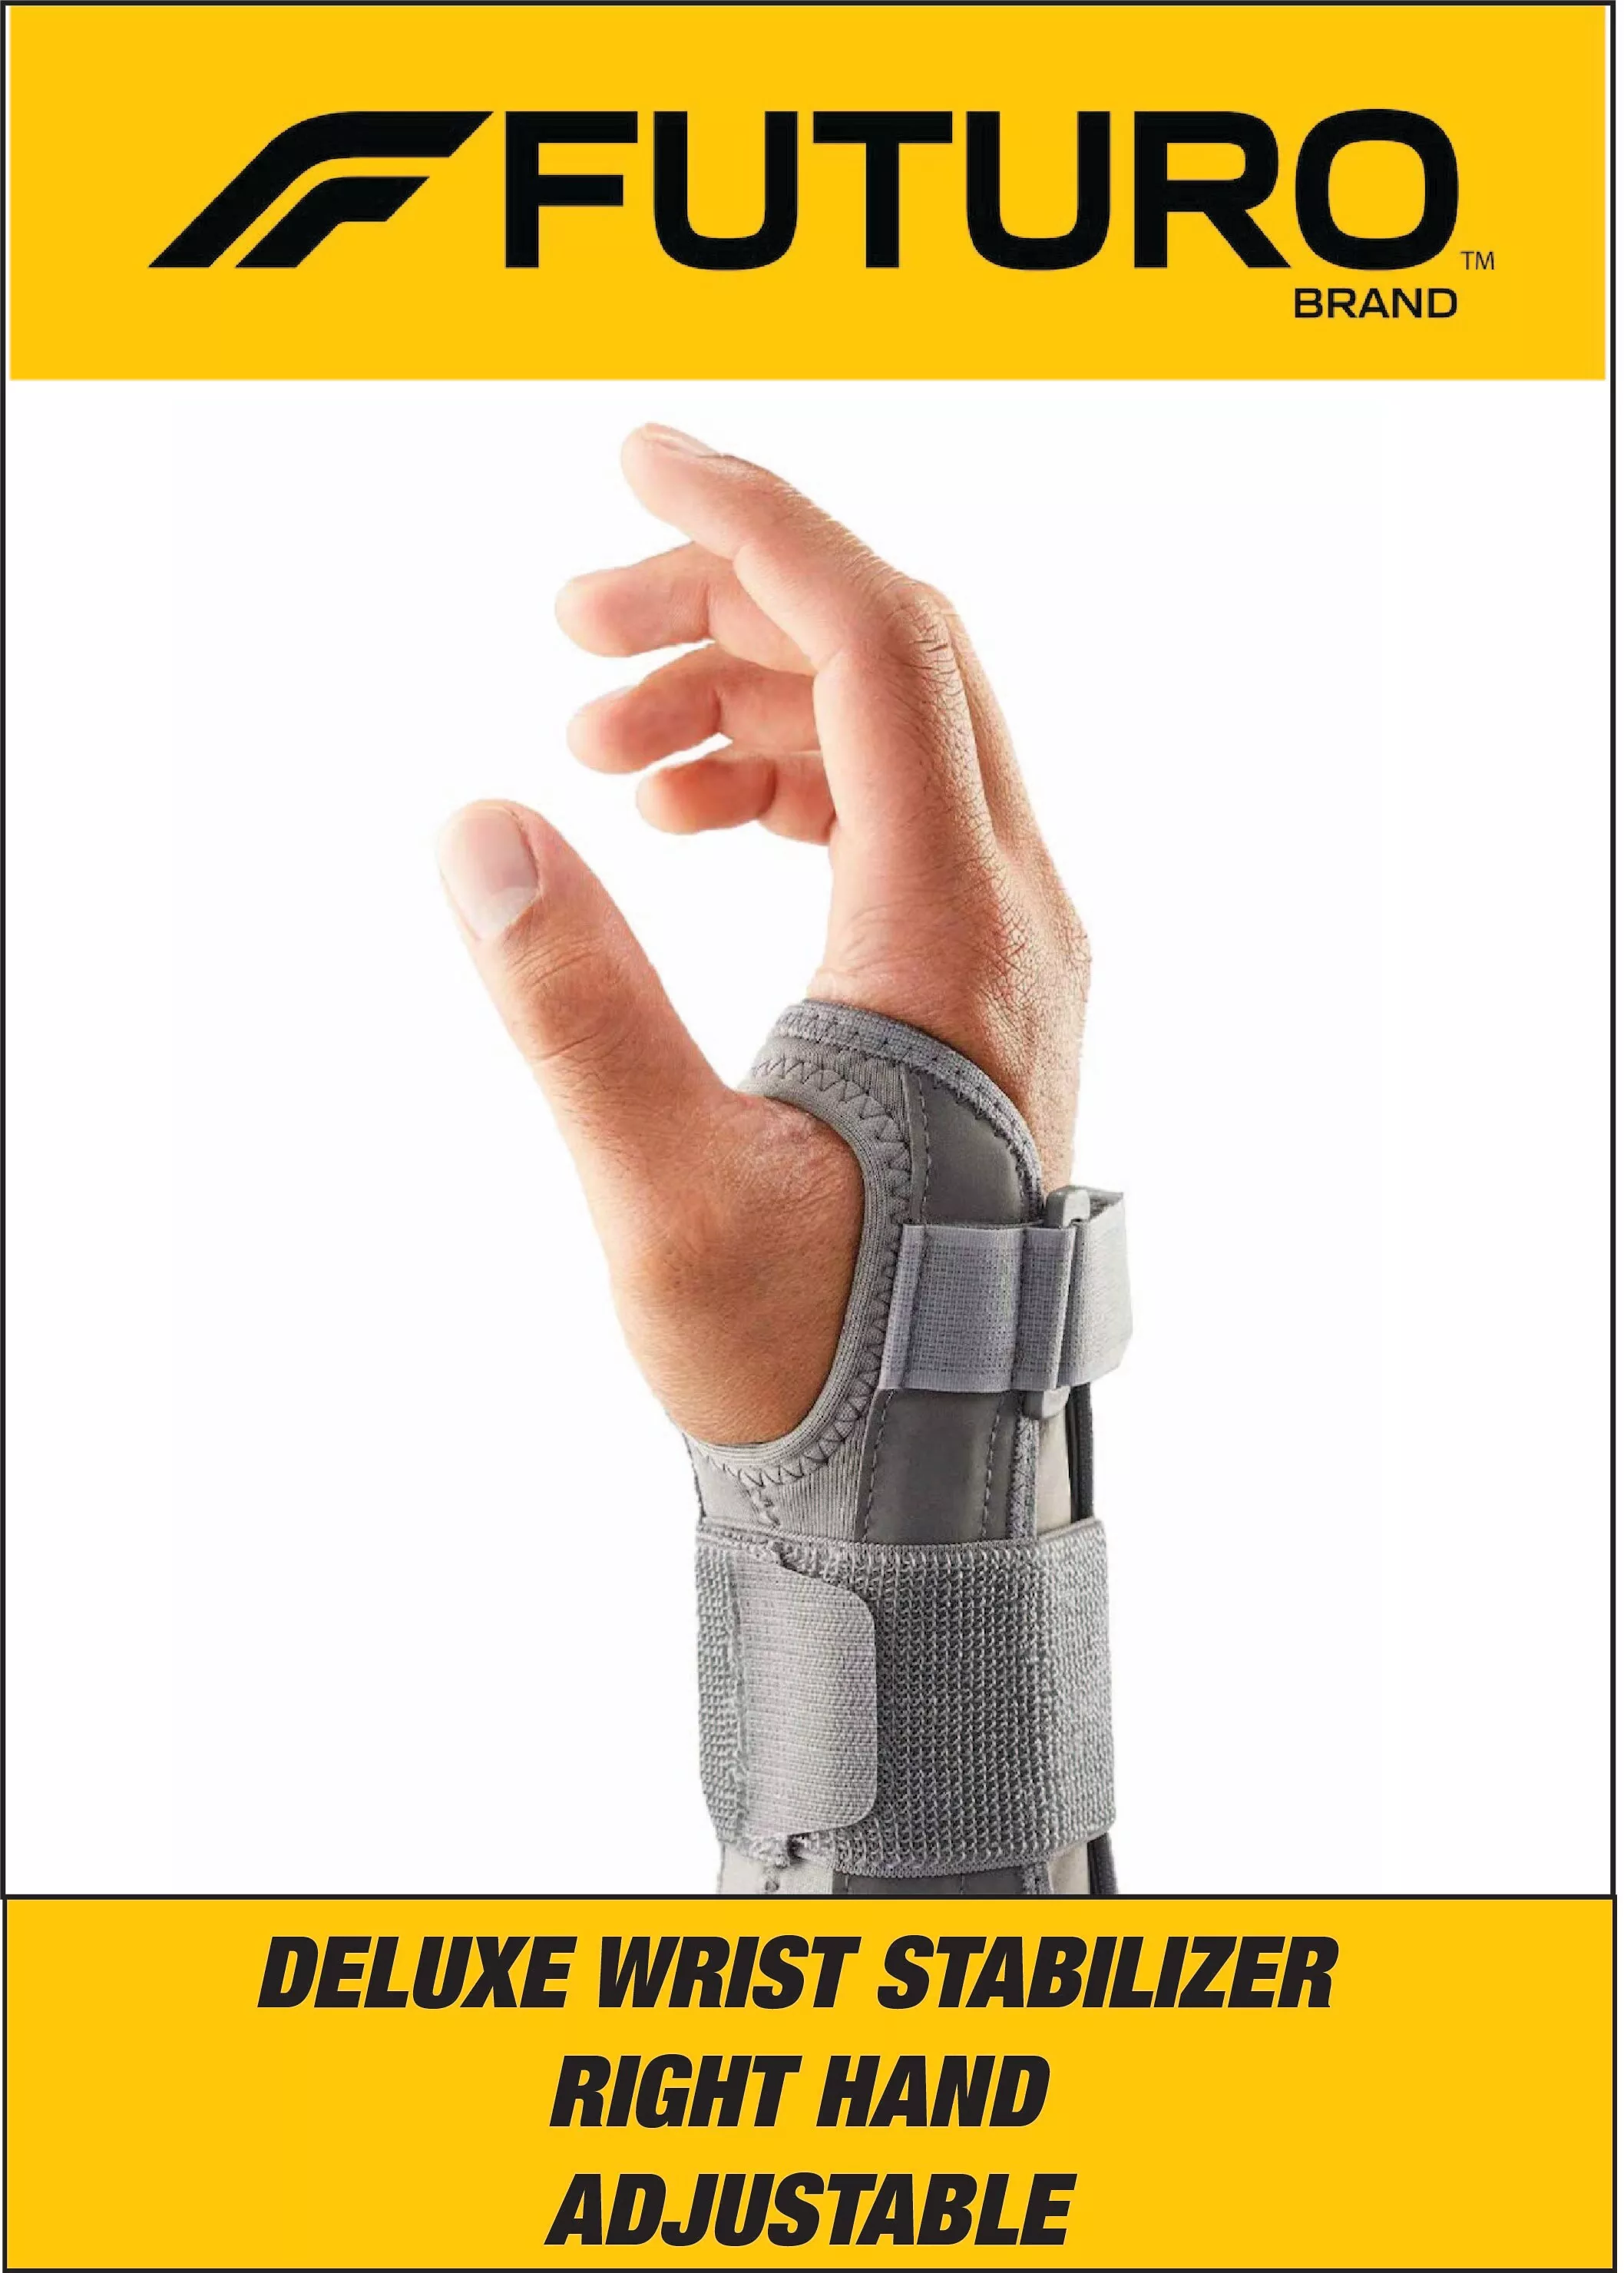 FUTURO™ Deluxe Wrist Stabilizer Right Hand, 09013ENR, Adjustable, Grey